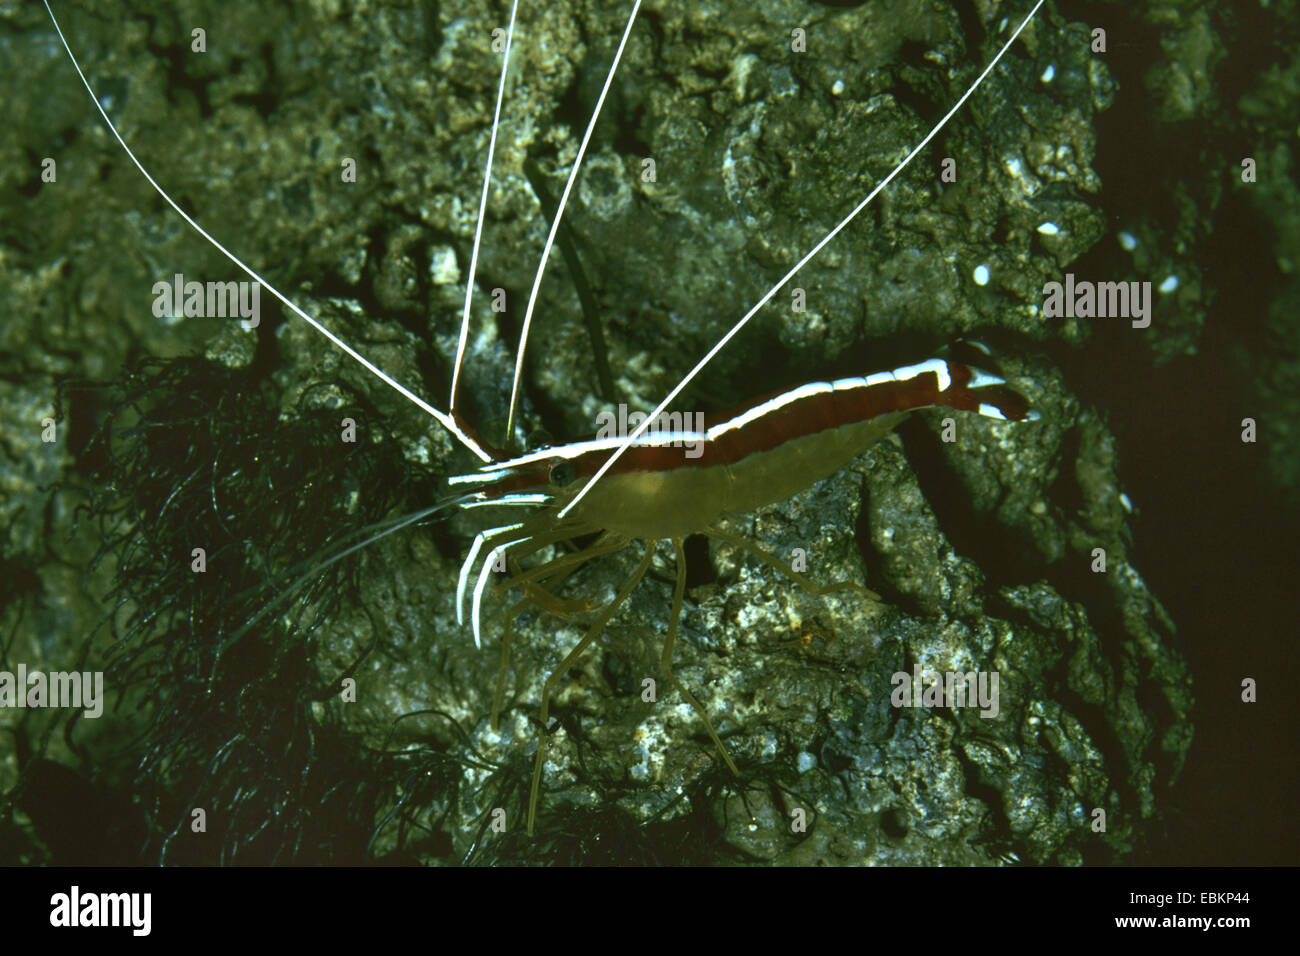 hunter shrimp (Hippolysmata grabhami, Lysmata grabhami), on a stone Stock Photo